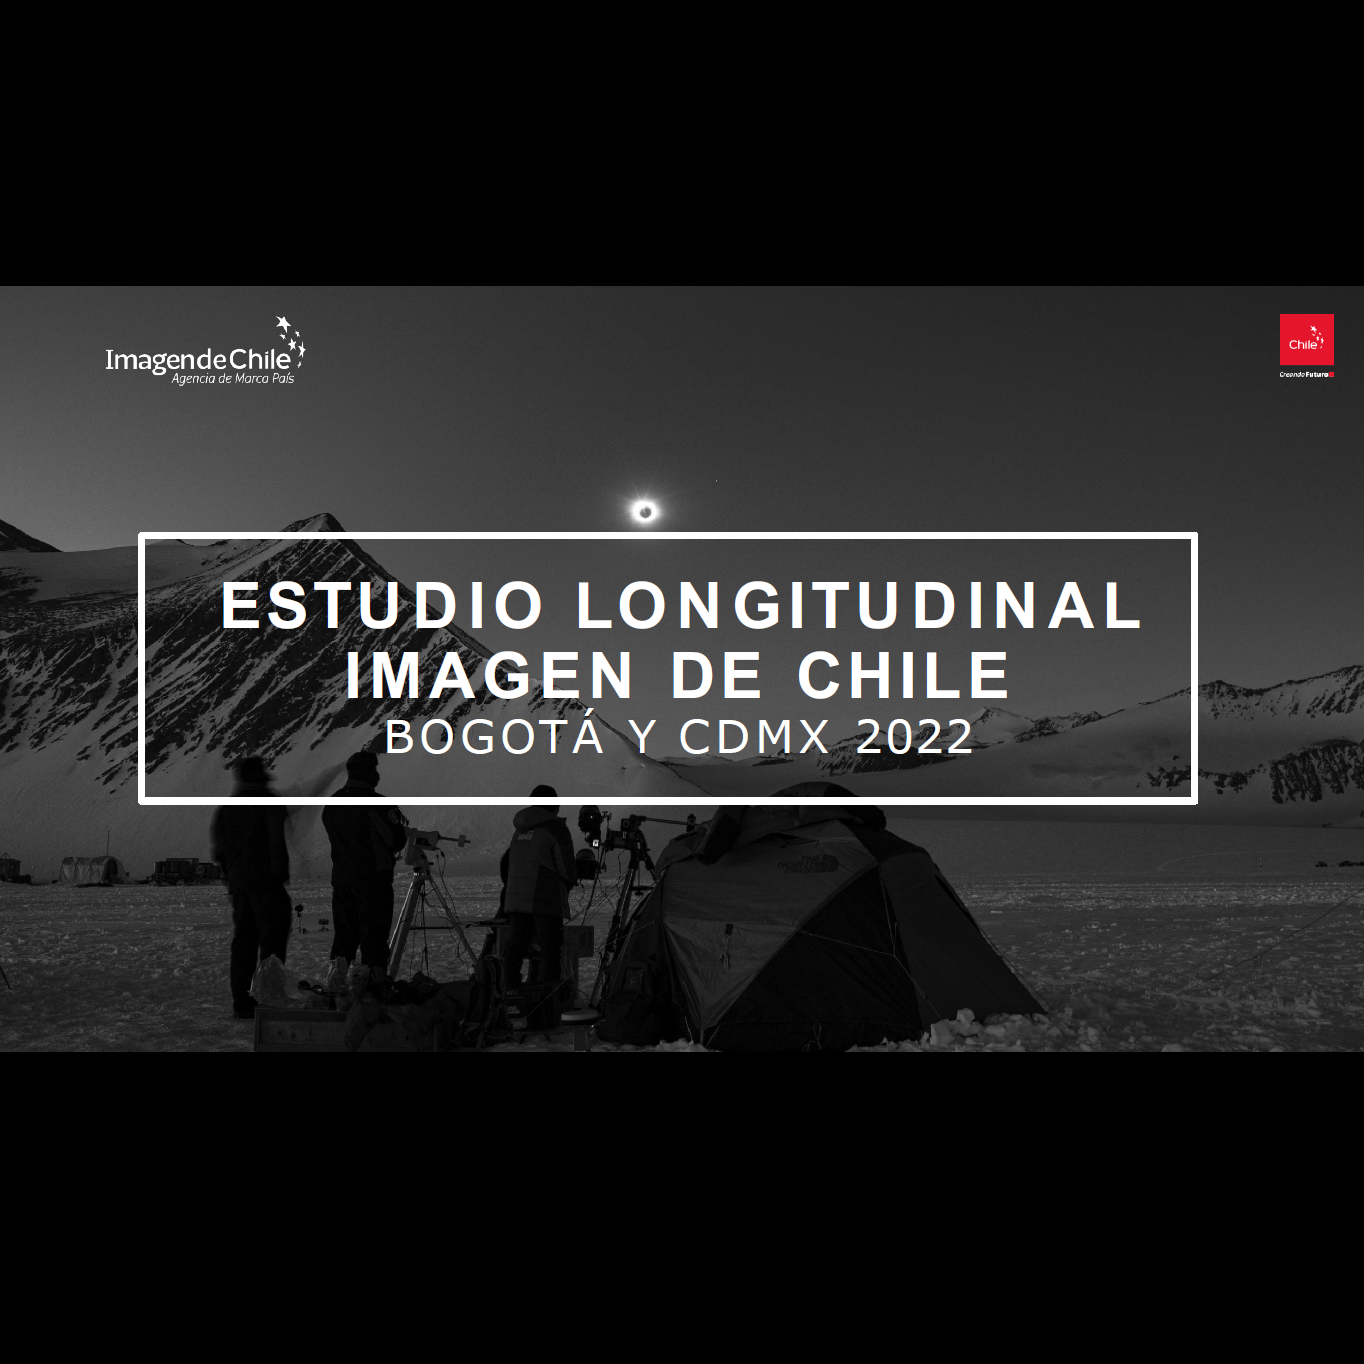 Estudio: Estudio longitudinal Imagen de Chile